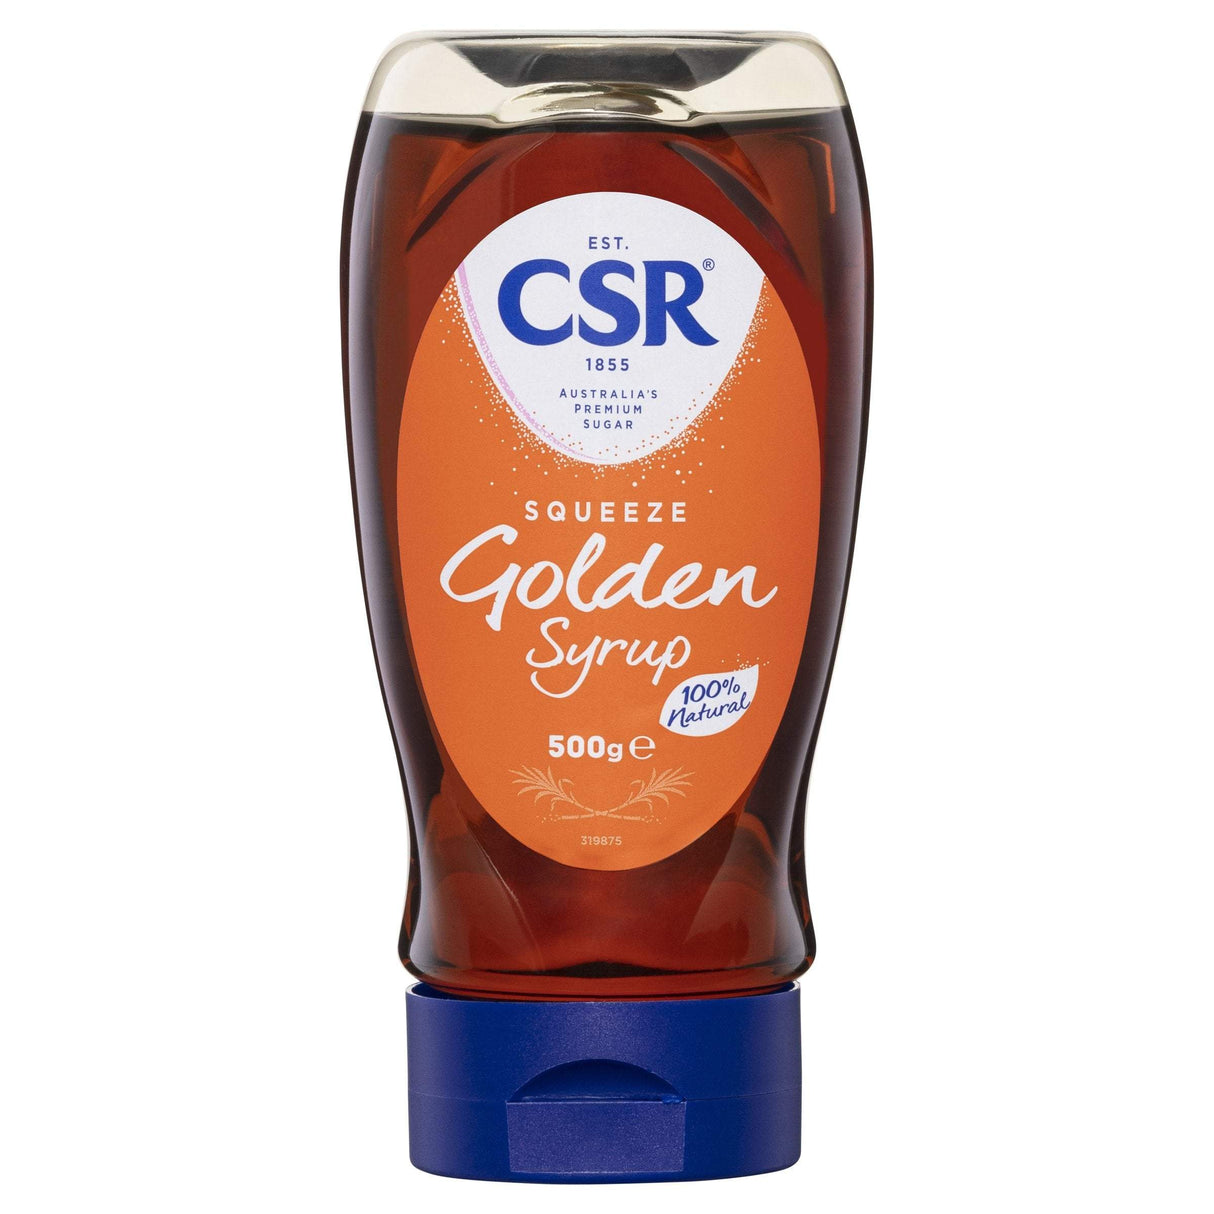 CSR Golden Syrup Upside Down Squeeze Bottle 500g